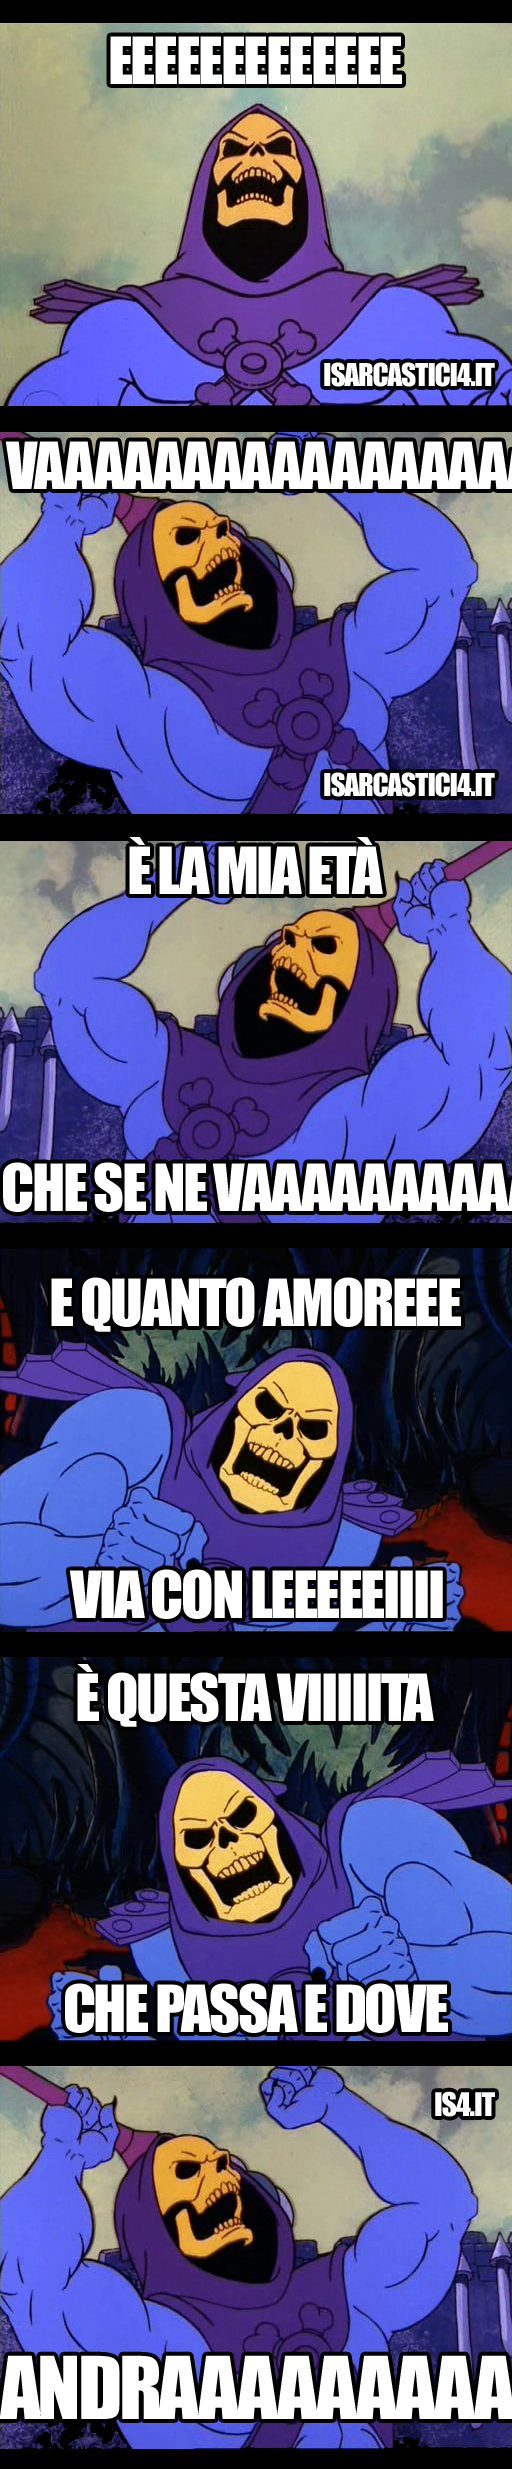 MOTU - Masters Of The Universe meme ita - Skeletor & Al Bano, È la mia vita